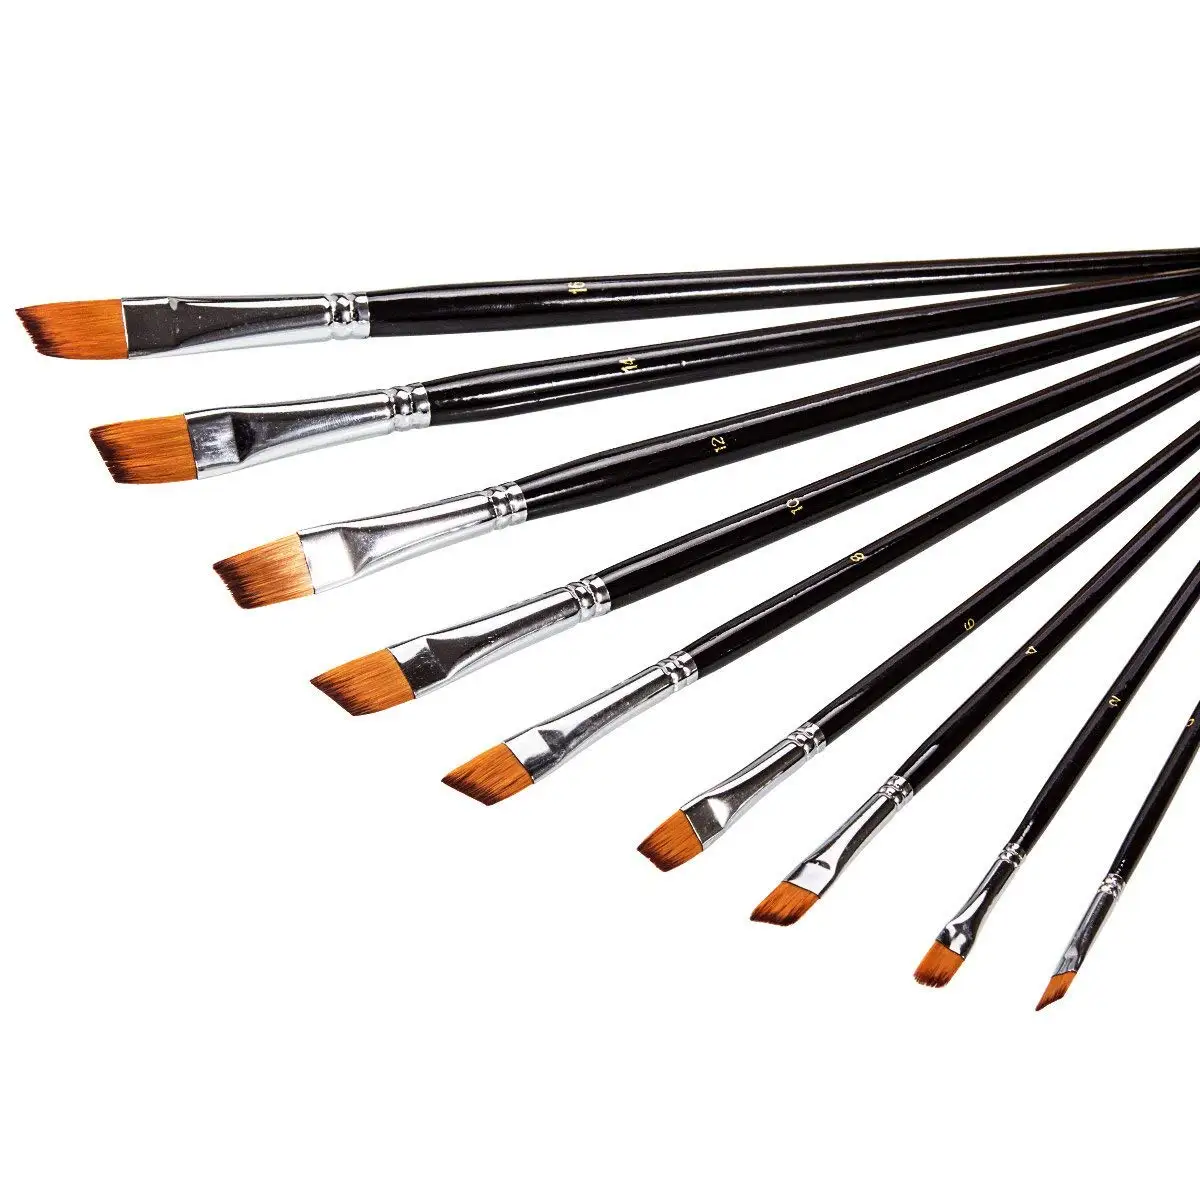 Buy 9pcs/set Angled Paint Brush Set, STARVAST Professional